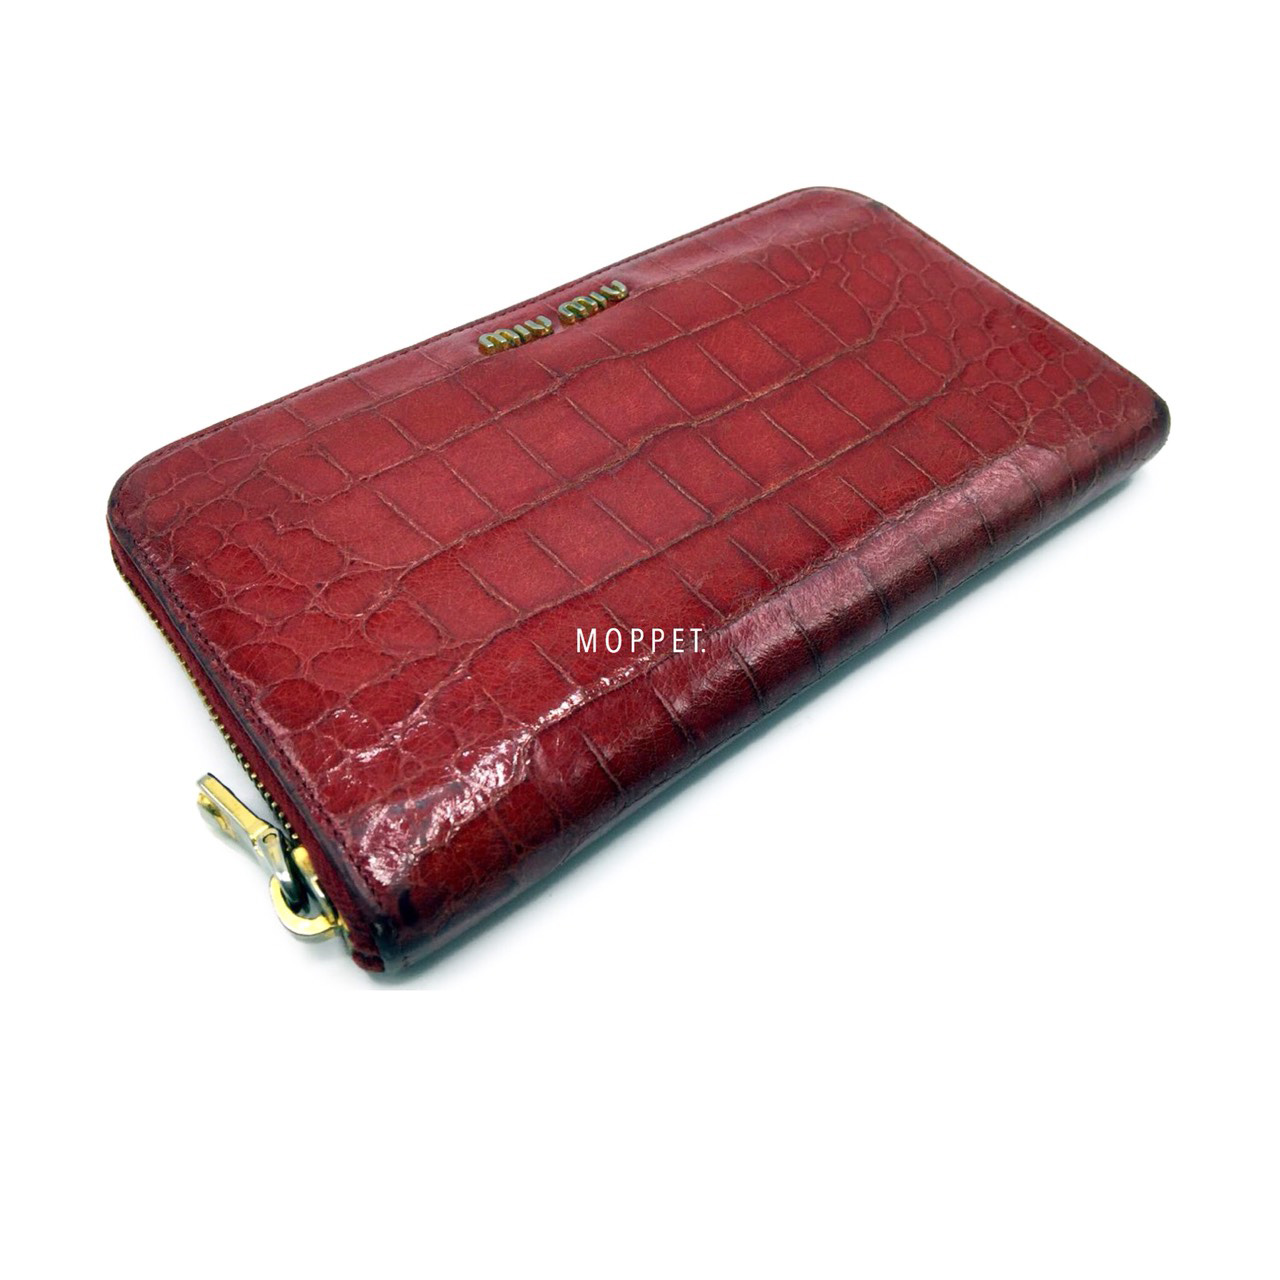 Used Miu Miu Zippy Long Wallet in Red Croc Printed Leather GHW